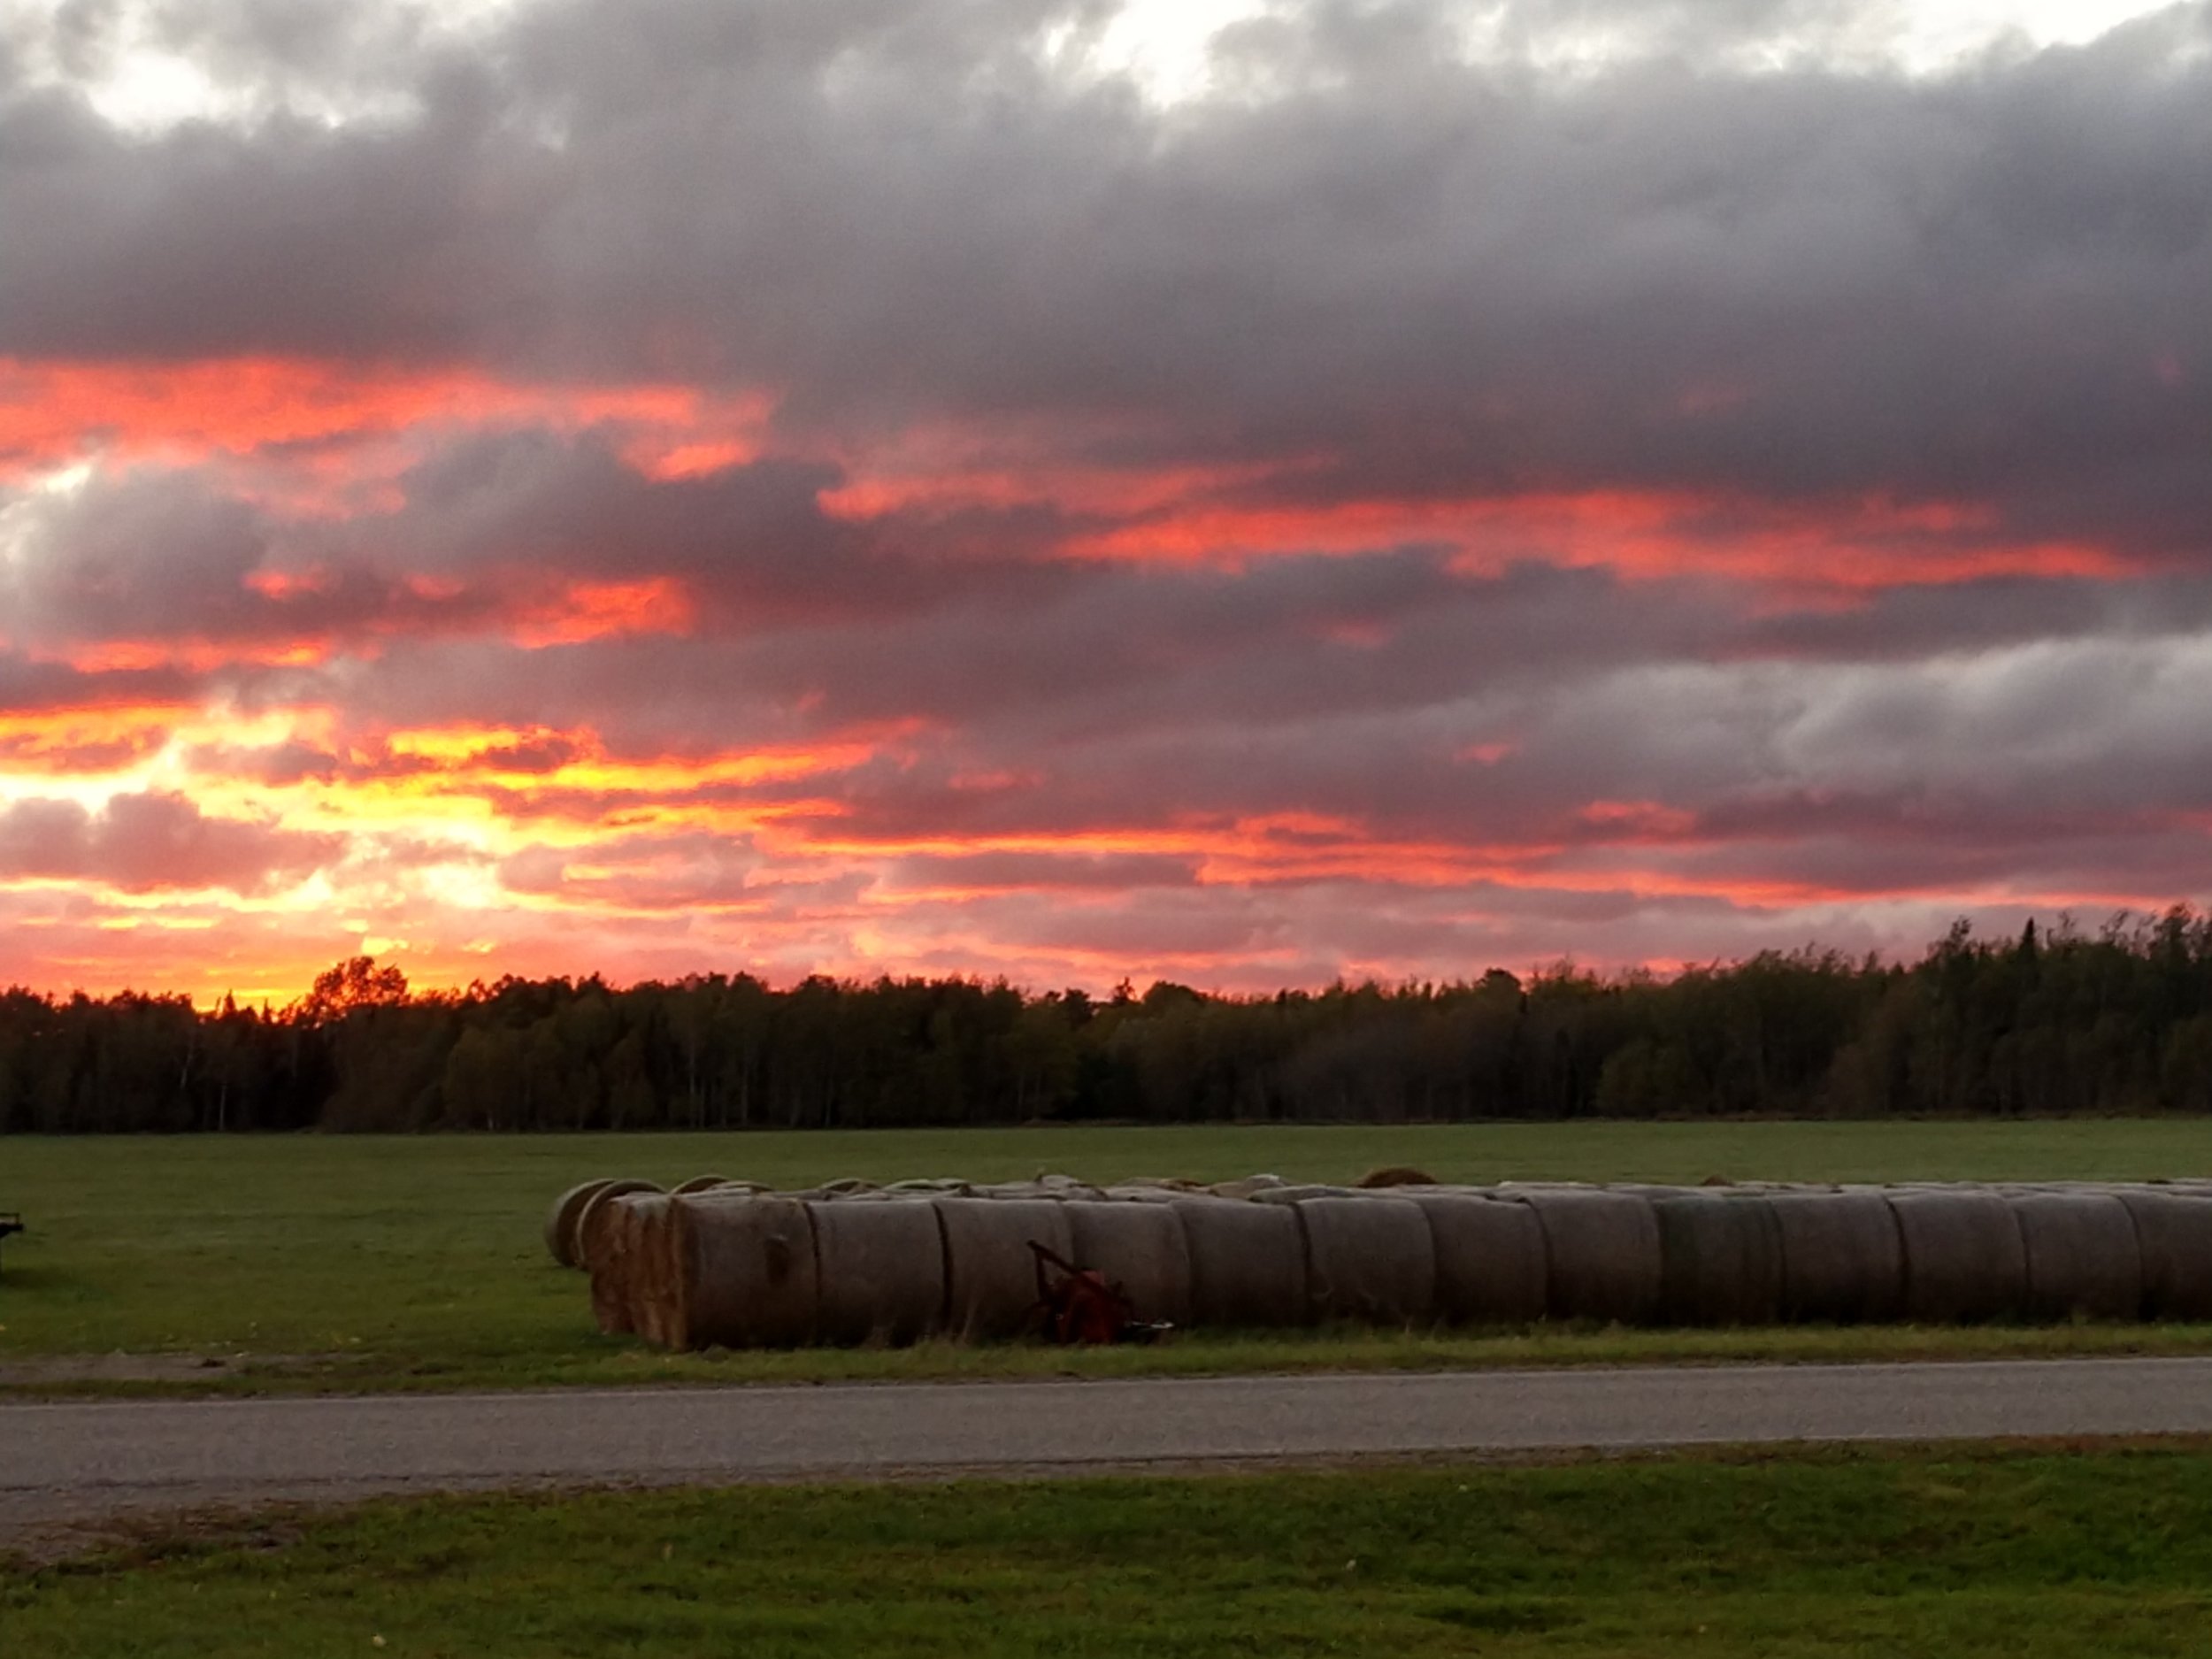 cover photo - orange sky over hay bales.jpg